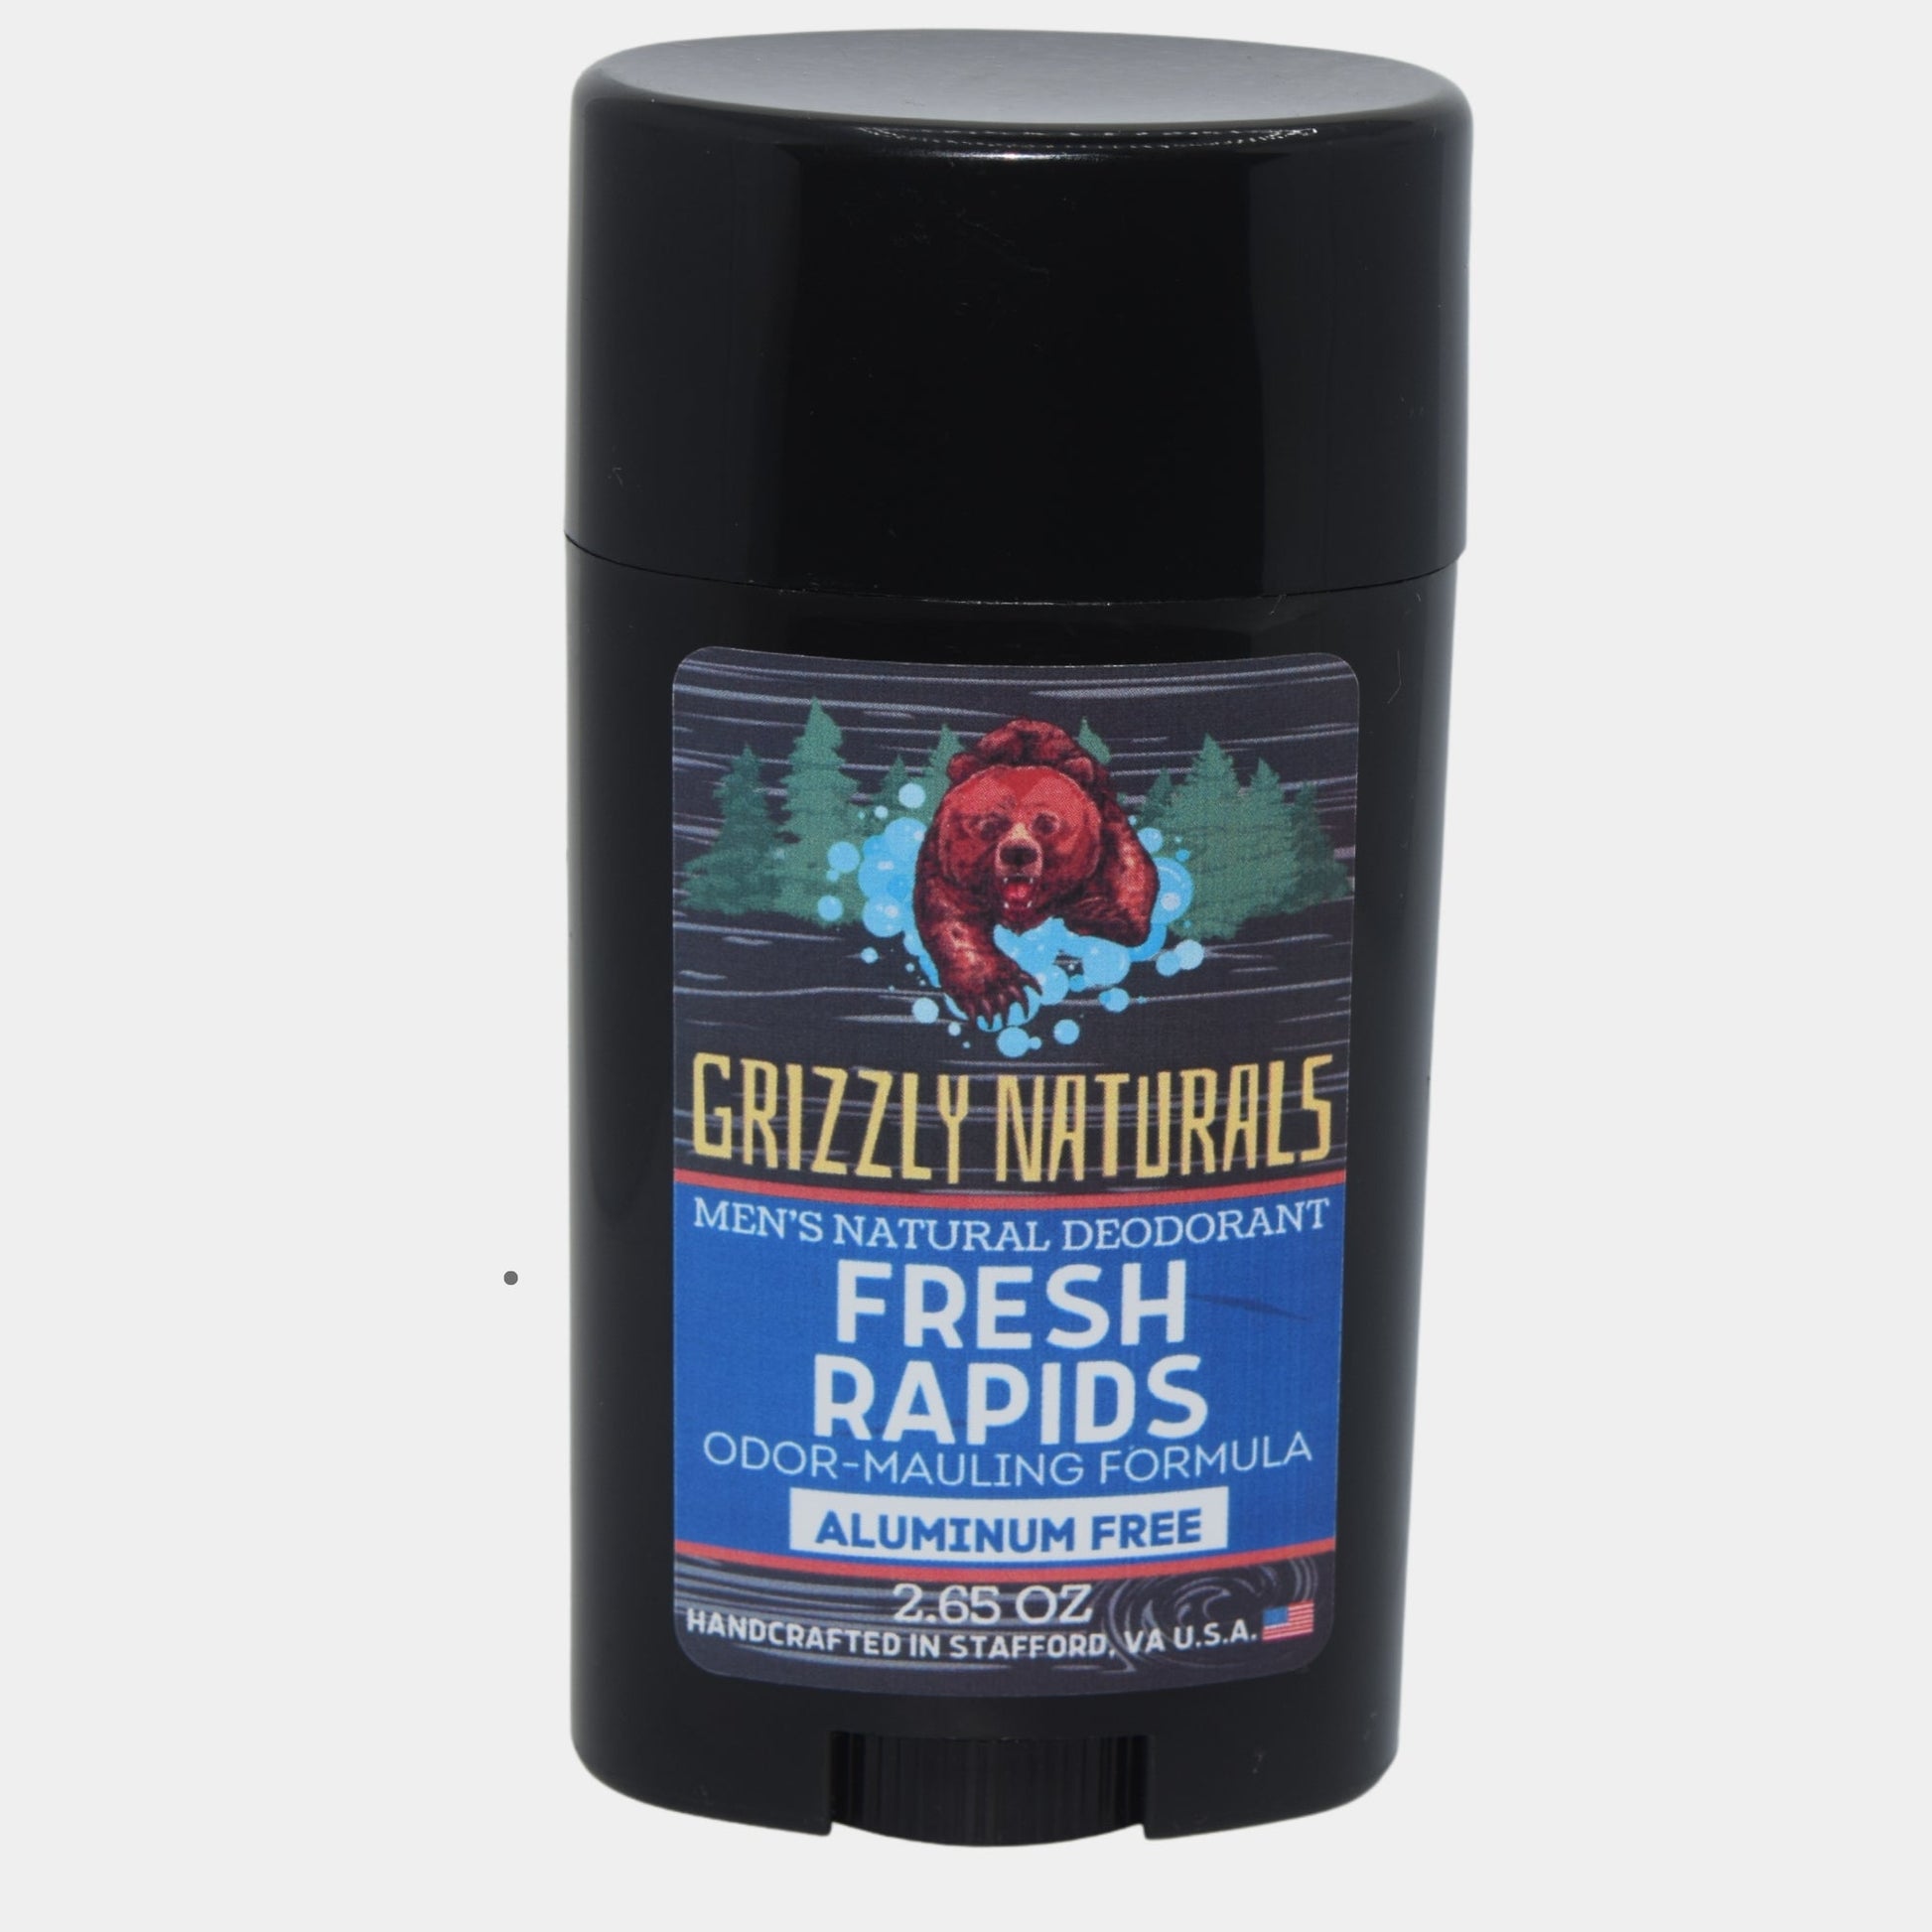 Fresh Rapids - DEODORANT - Baking Soda & Aluminum Free - Grizzly Naturals Soap Company